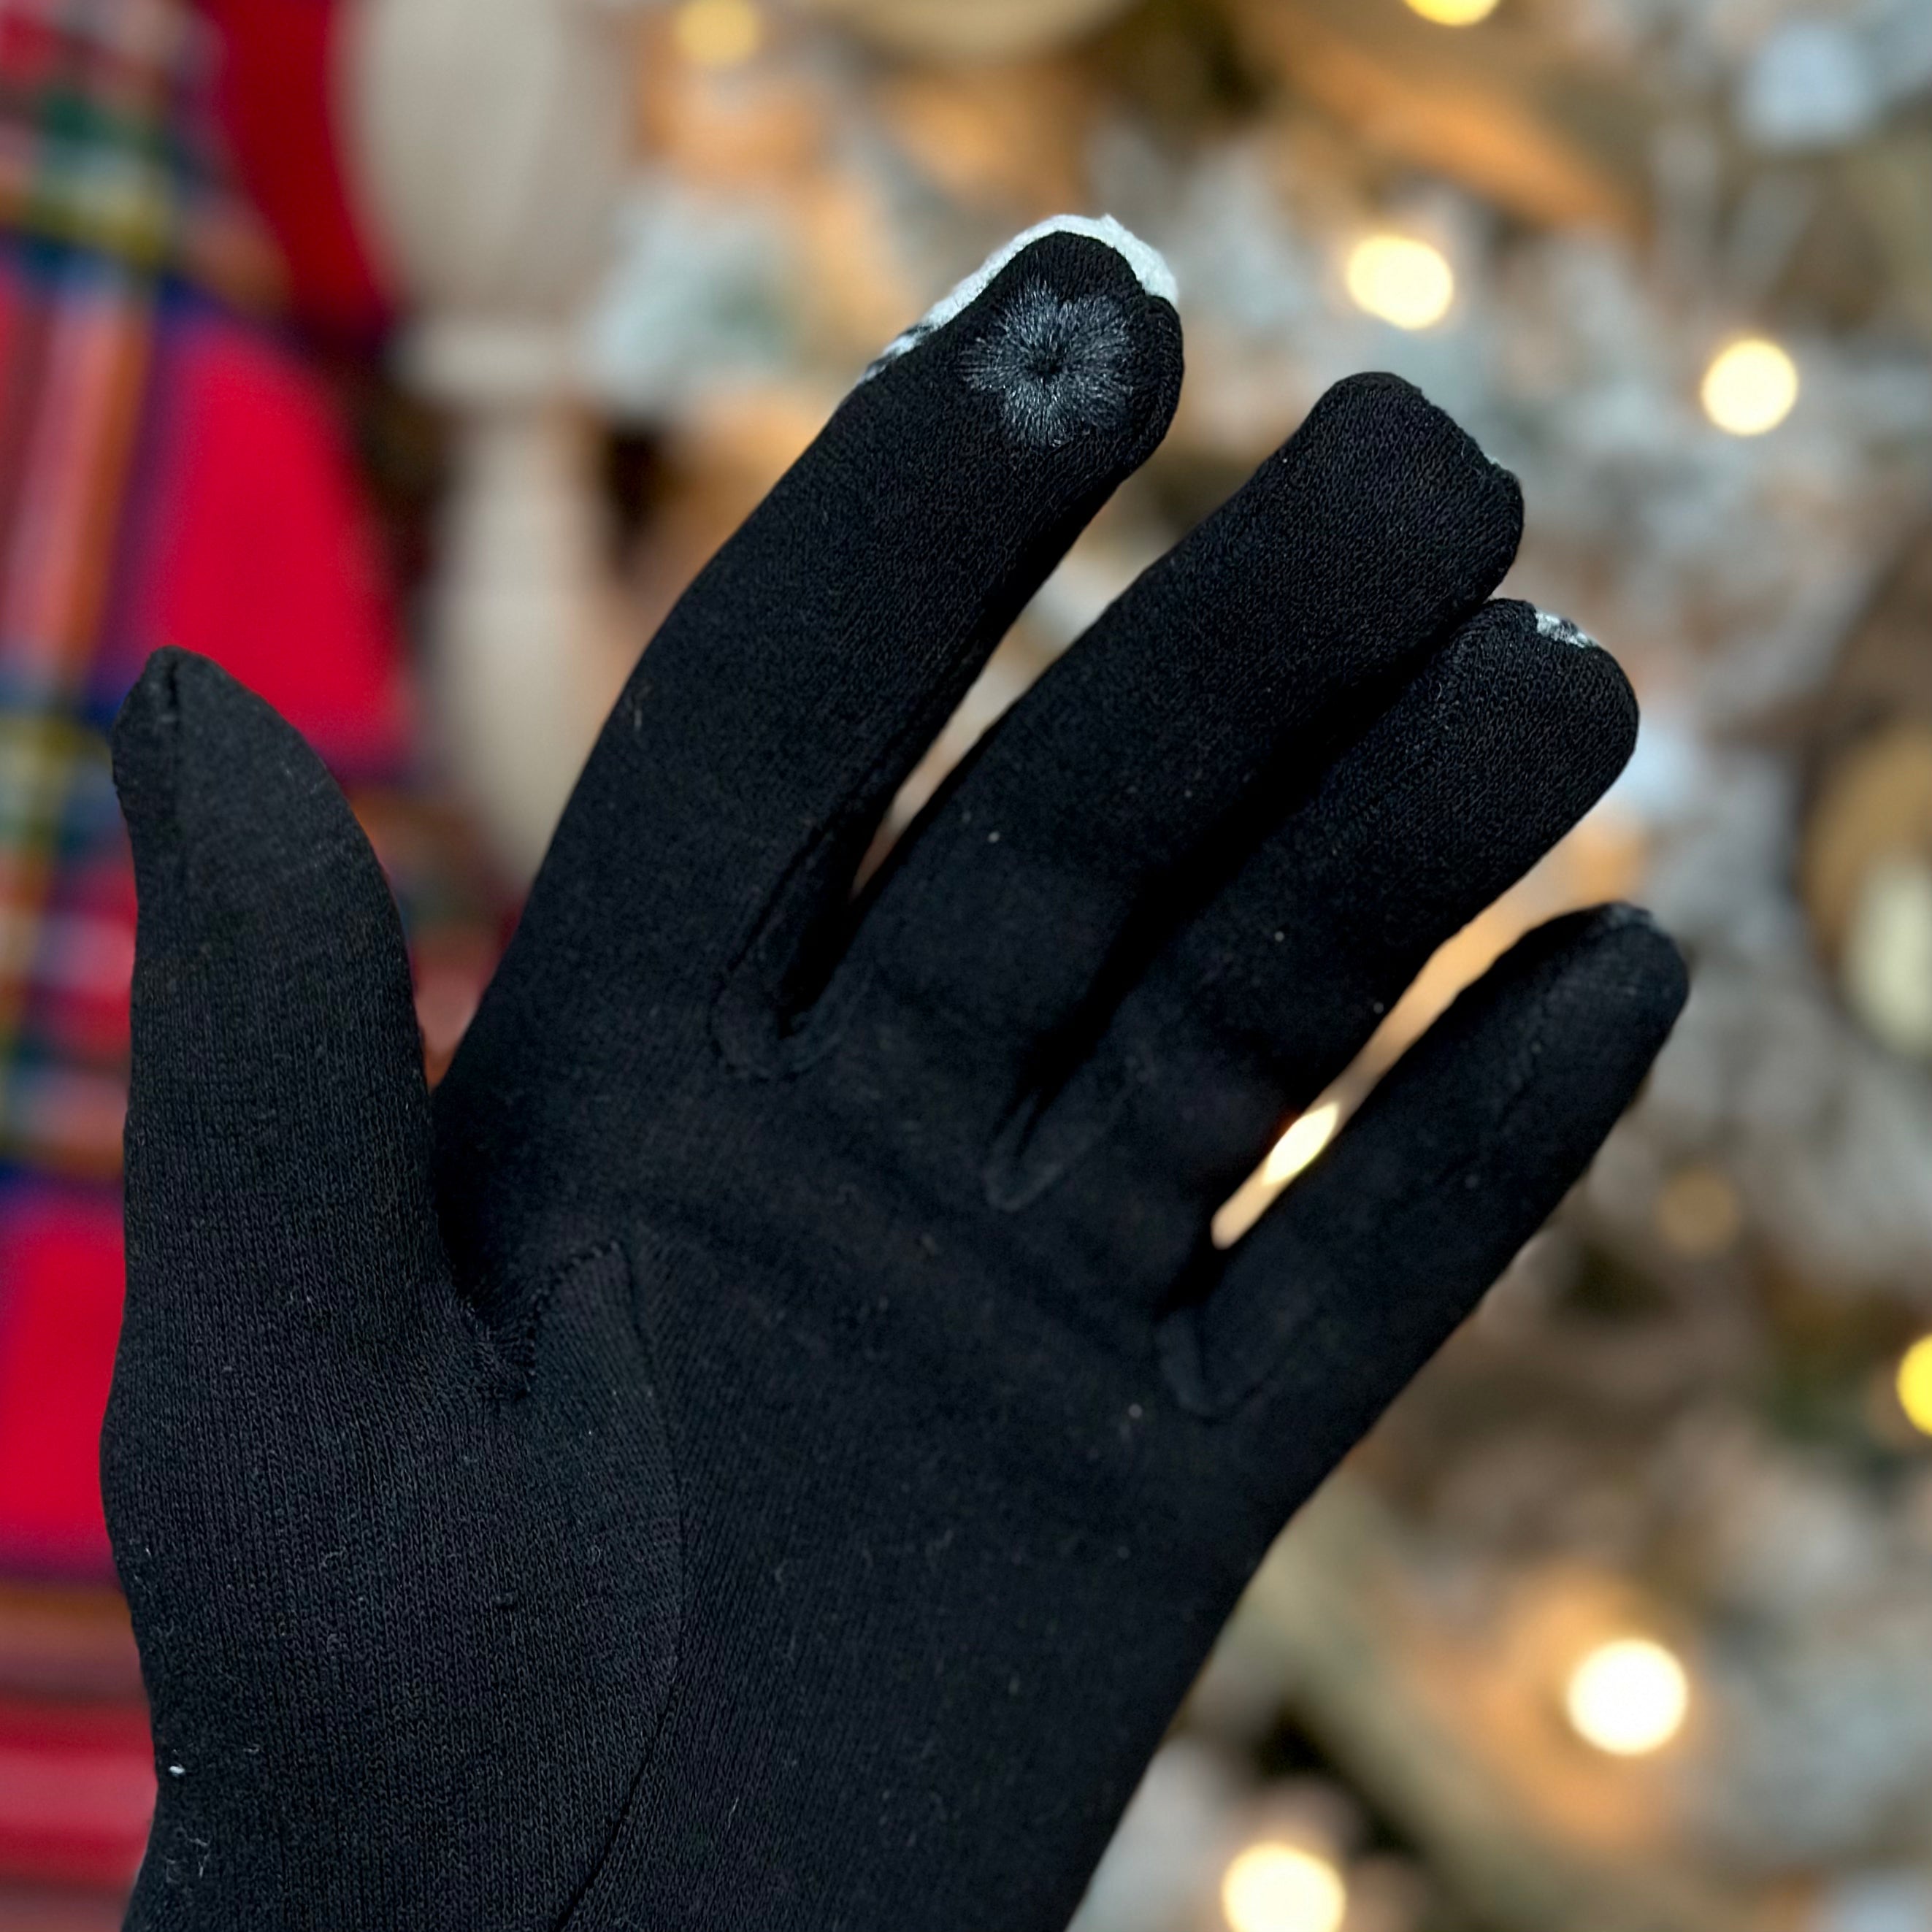 Black Watch Tartan Navy Blue, Forest Green, Black Plaid Touchscreen Gloves